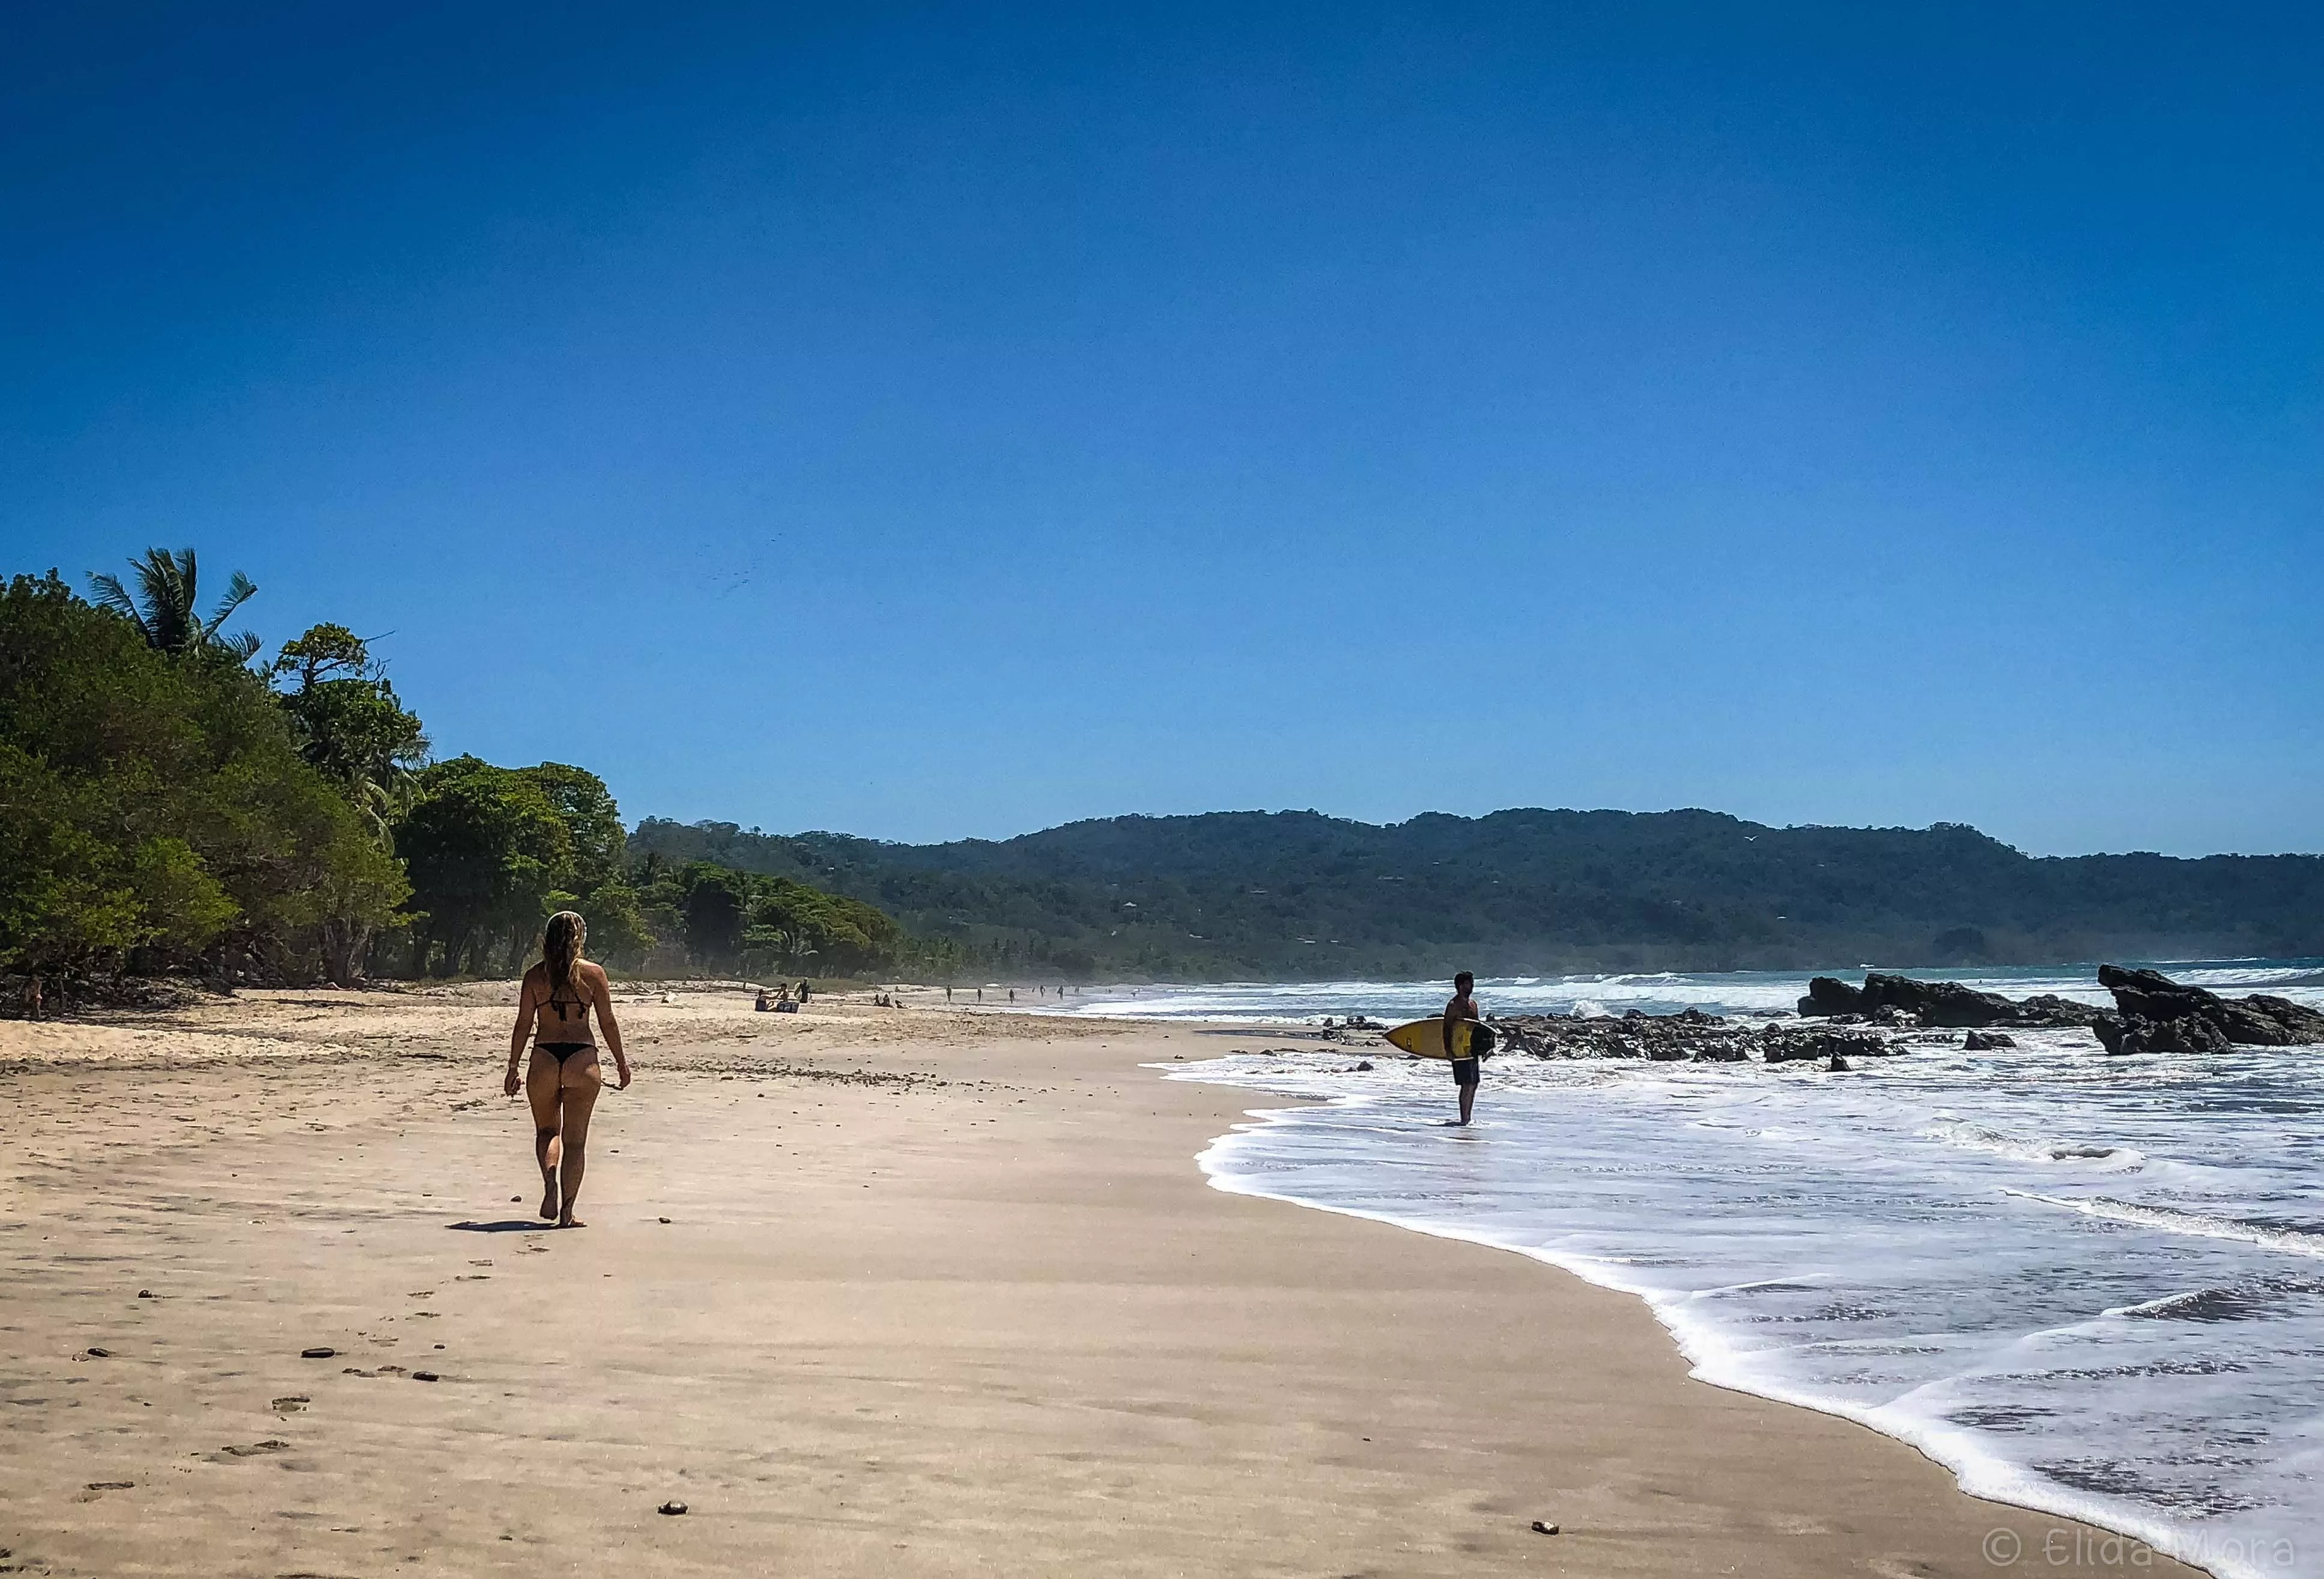 Santa Teresa Beach in Costa Rica, North America | Surfing,Beaches - Rated 0.9